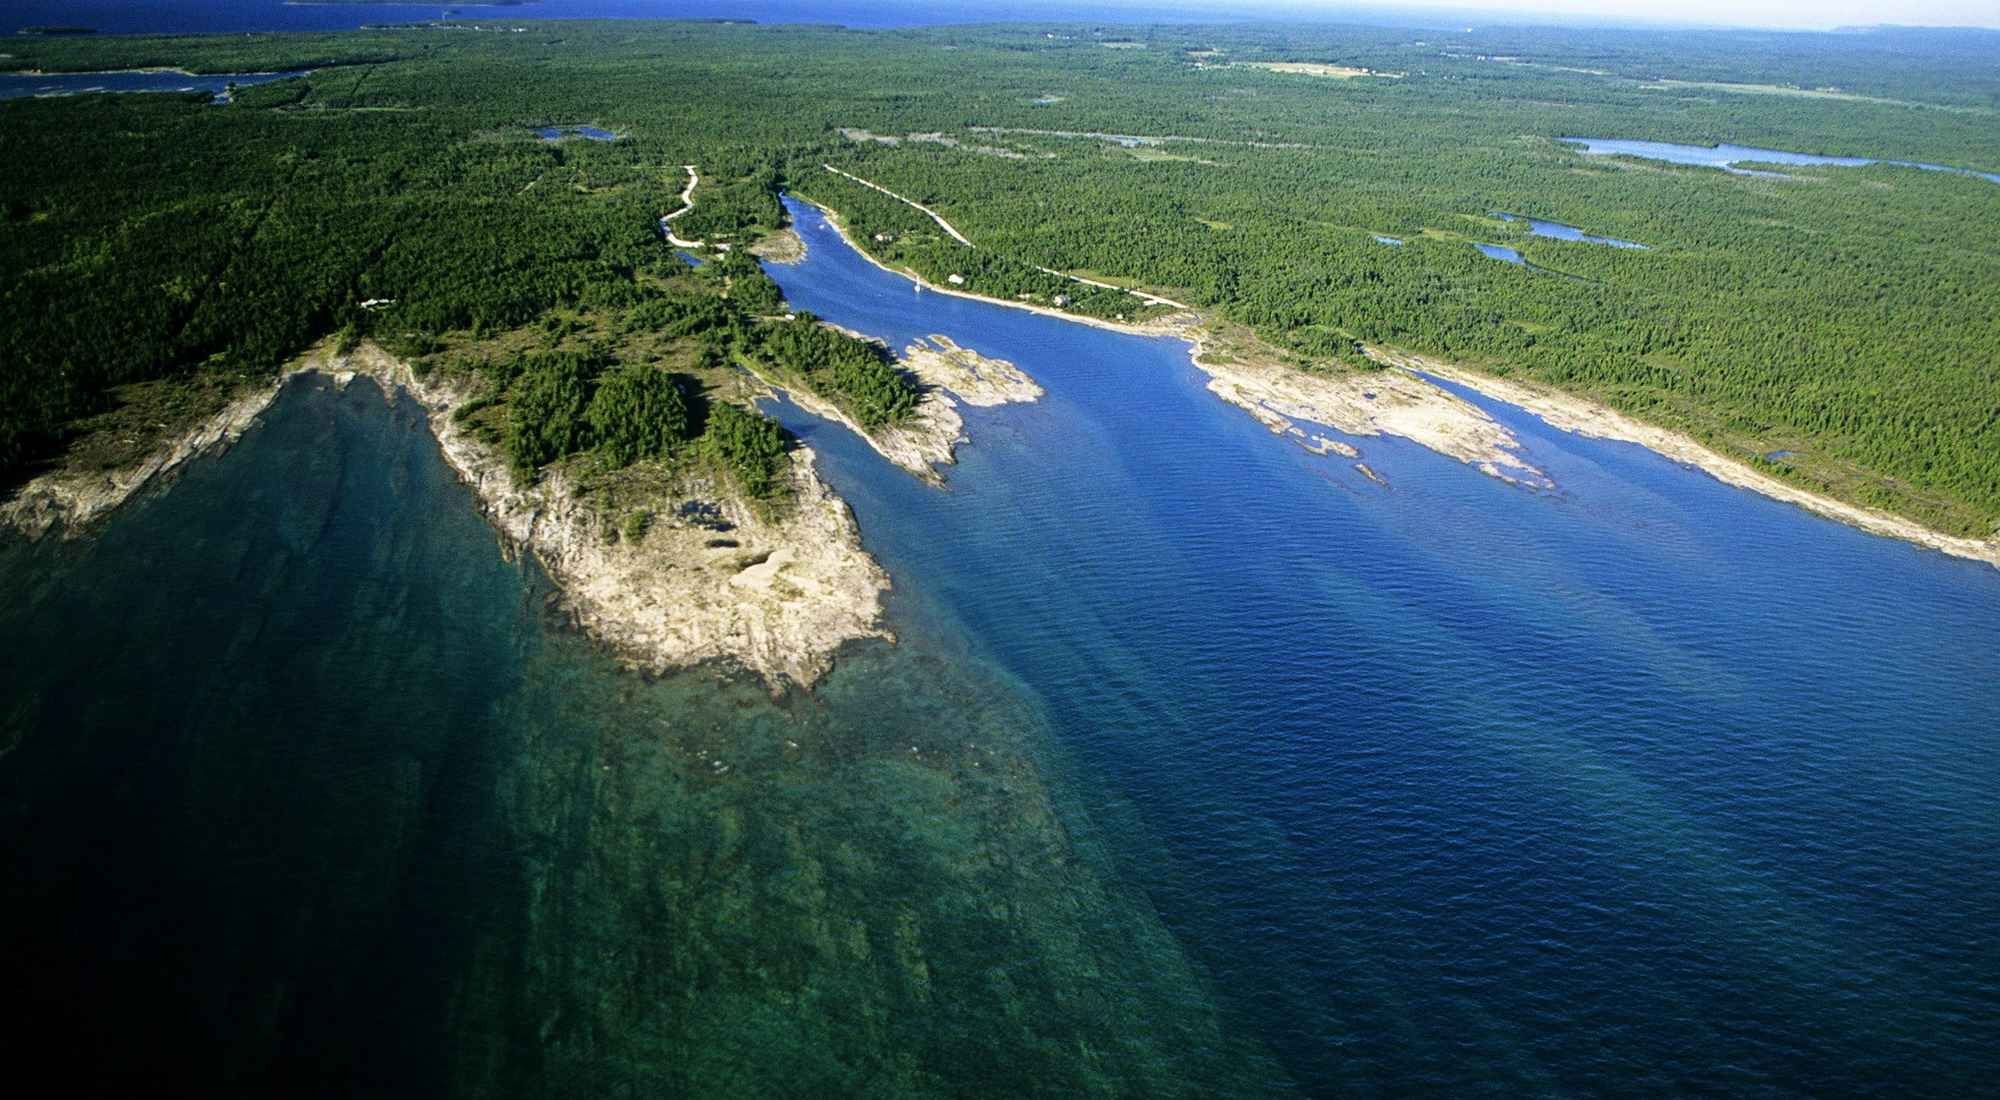 Глубина озера гурон. Озеро Гурон Северная Америка. Великое озеро Гурон. Озеро Гурон Канада. Остров Манитулин на озере Гурон.